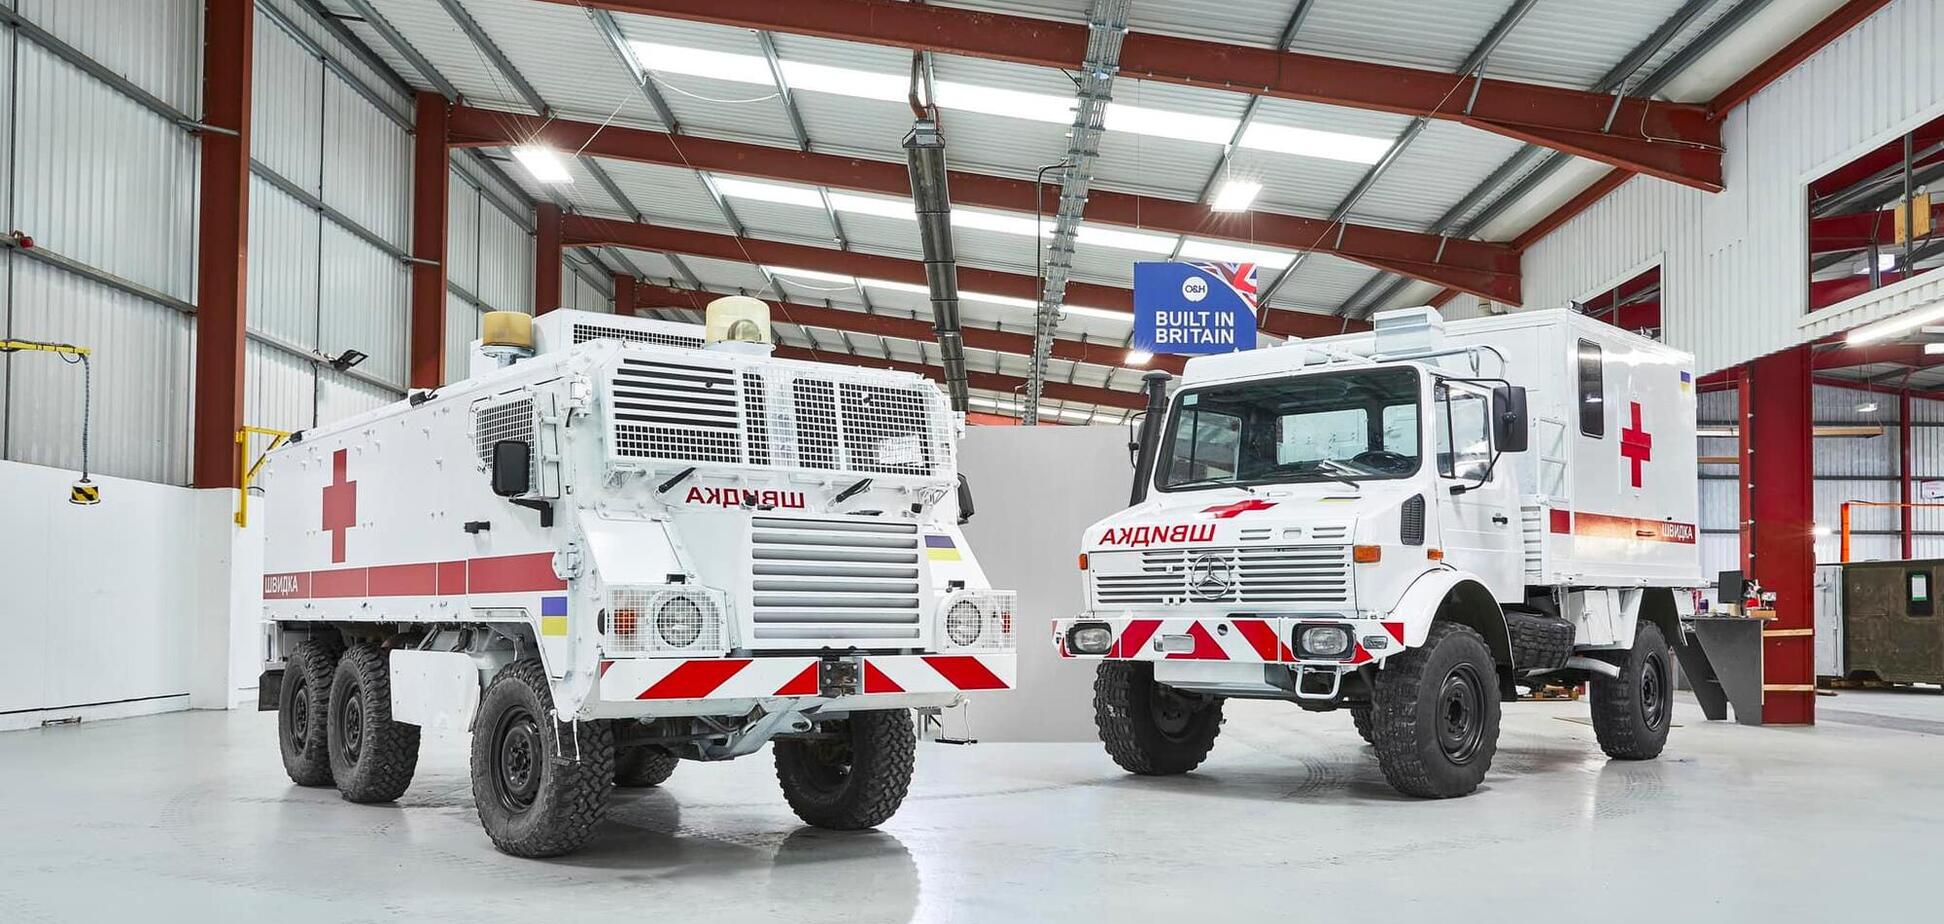 Україна закупила 30 броньованих машин швидкої допомоги у Великобританії